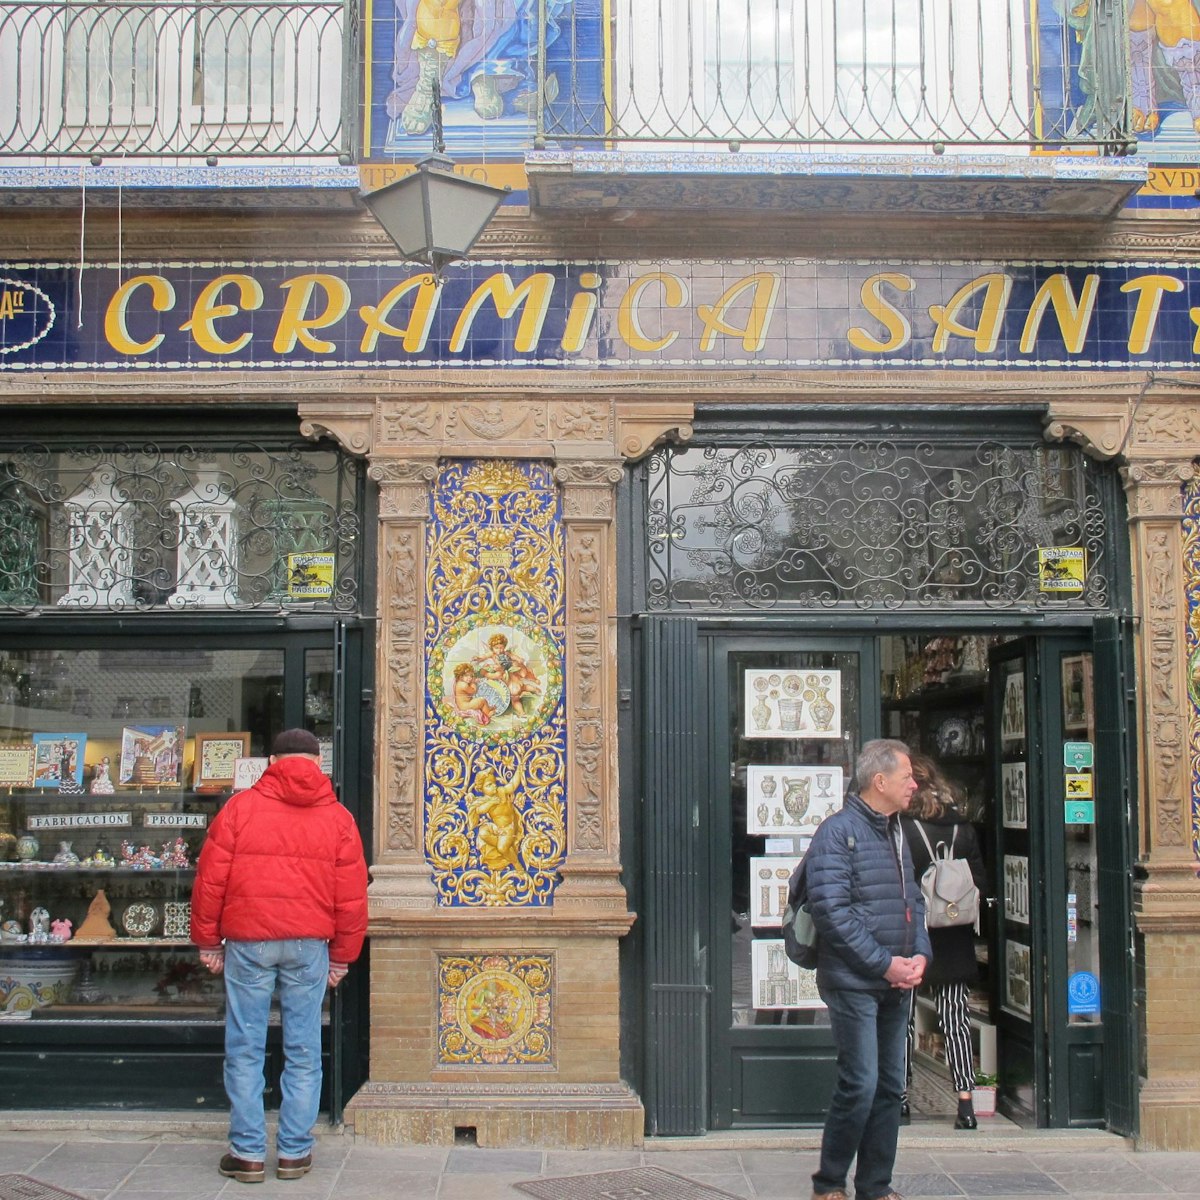 Facade of shop Ceramica Santa Ana.